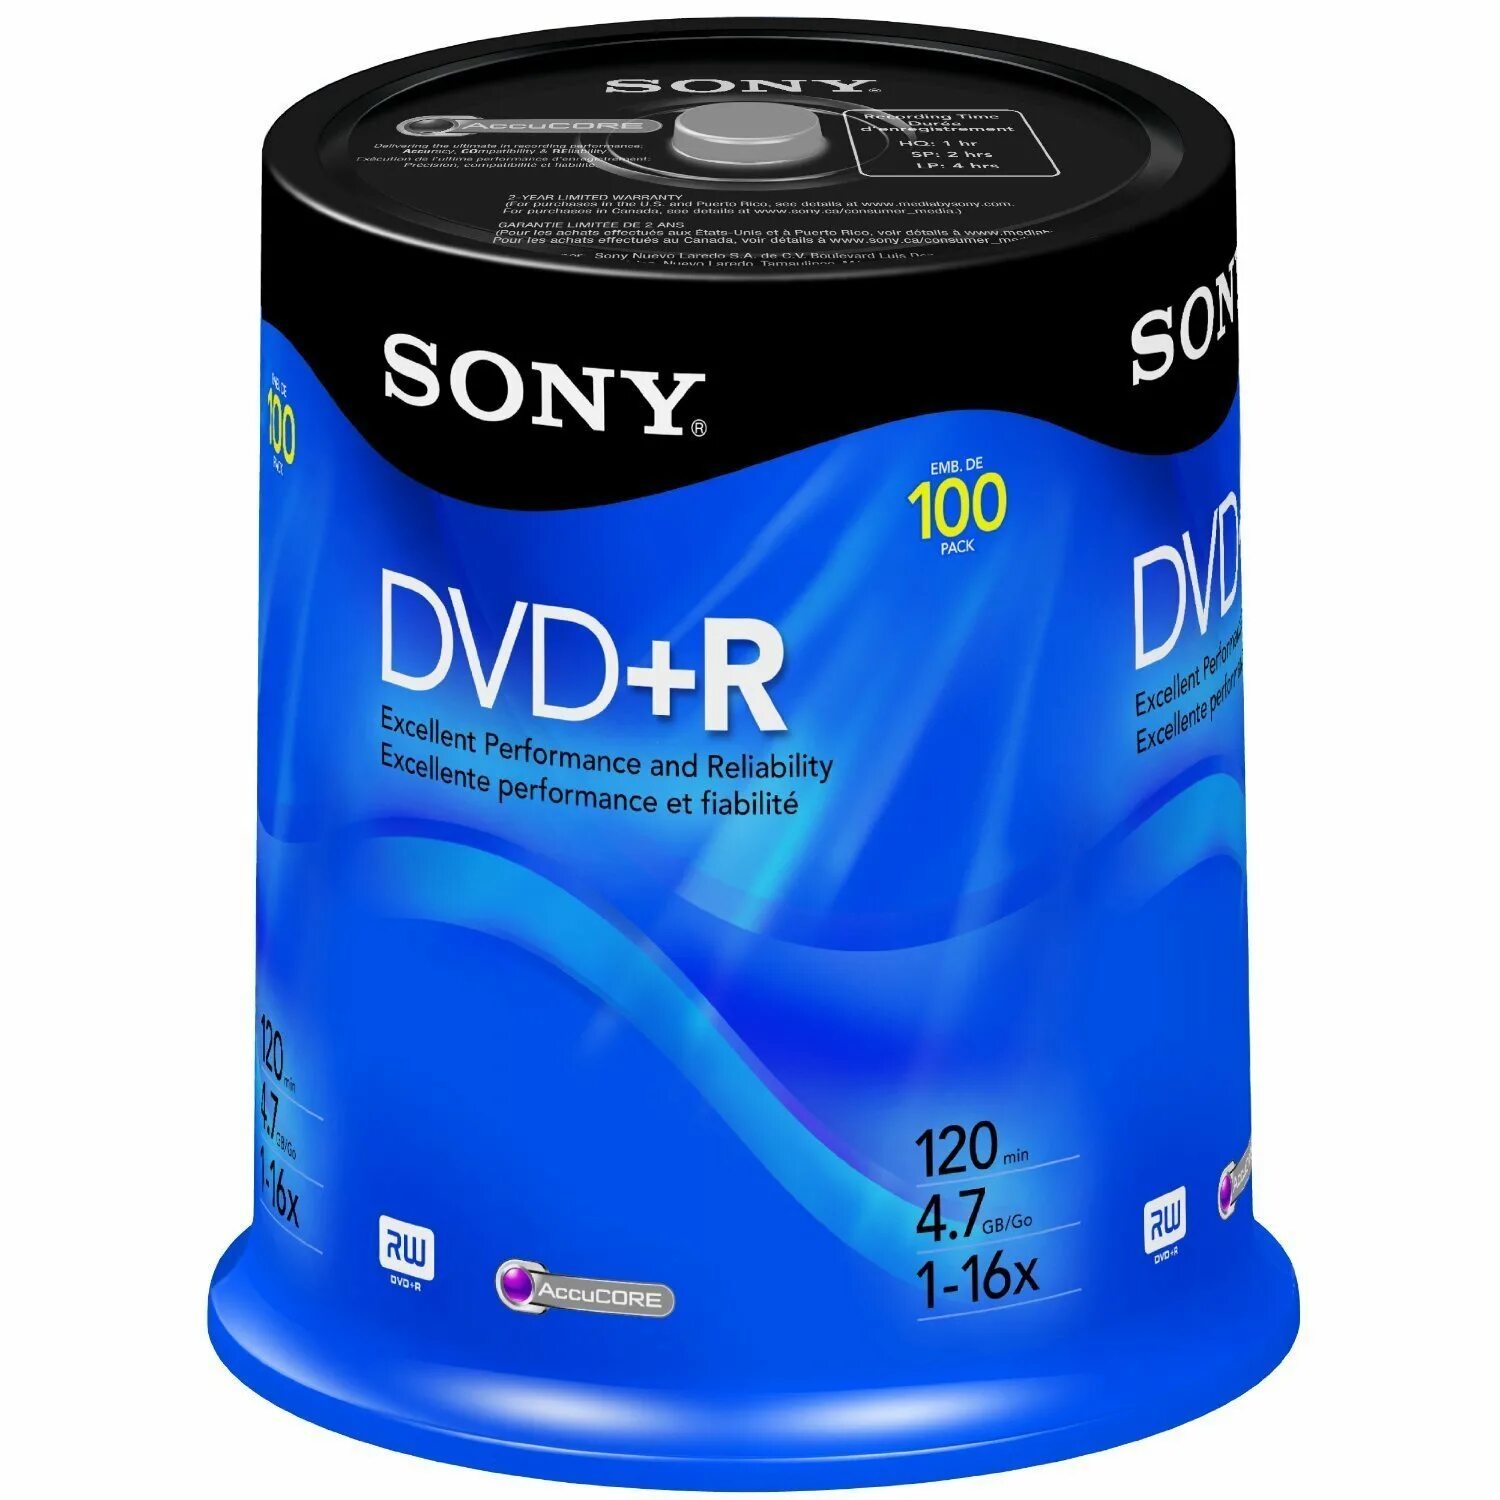 Двд диски Accucore Sony. DVD-R. Двд р. X Digital DVD+R. Dvd r 100